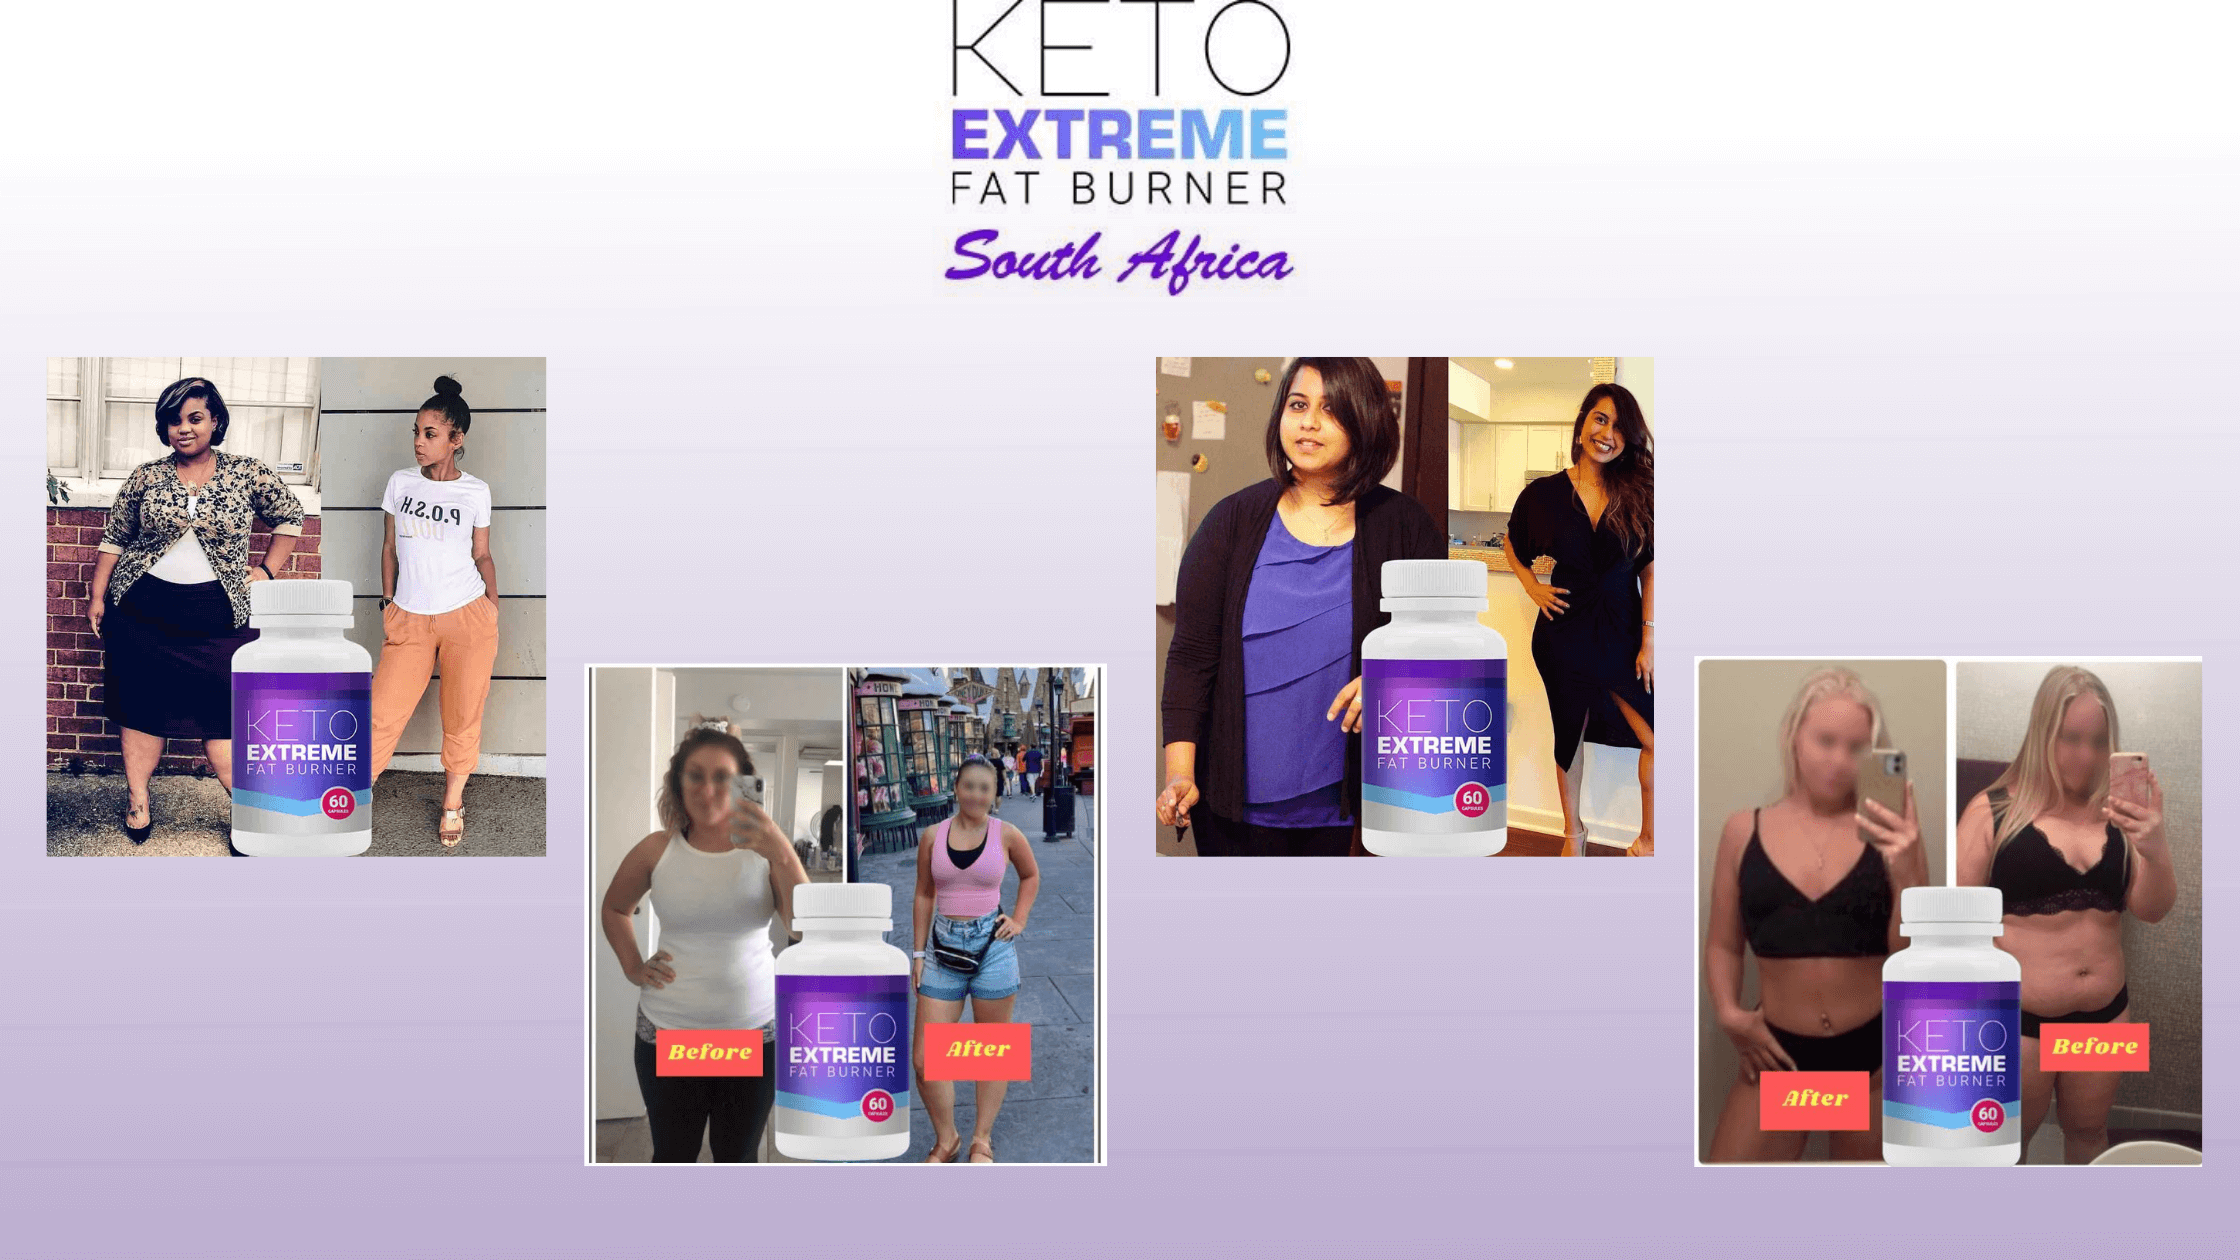 Keto Extreme Fat Burner South Africa Customer Reviews